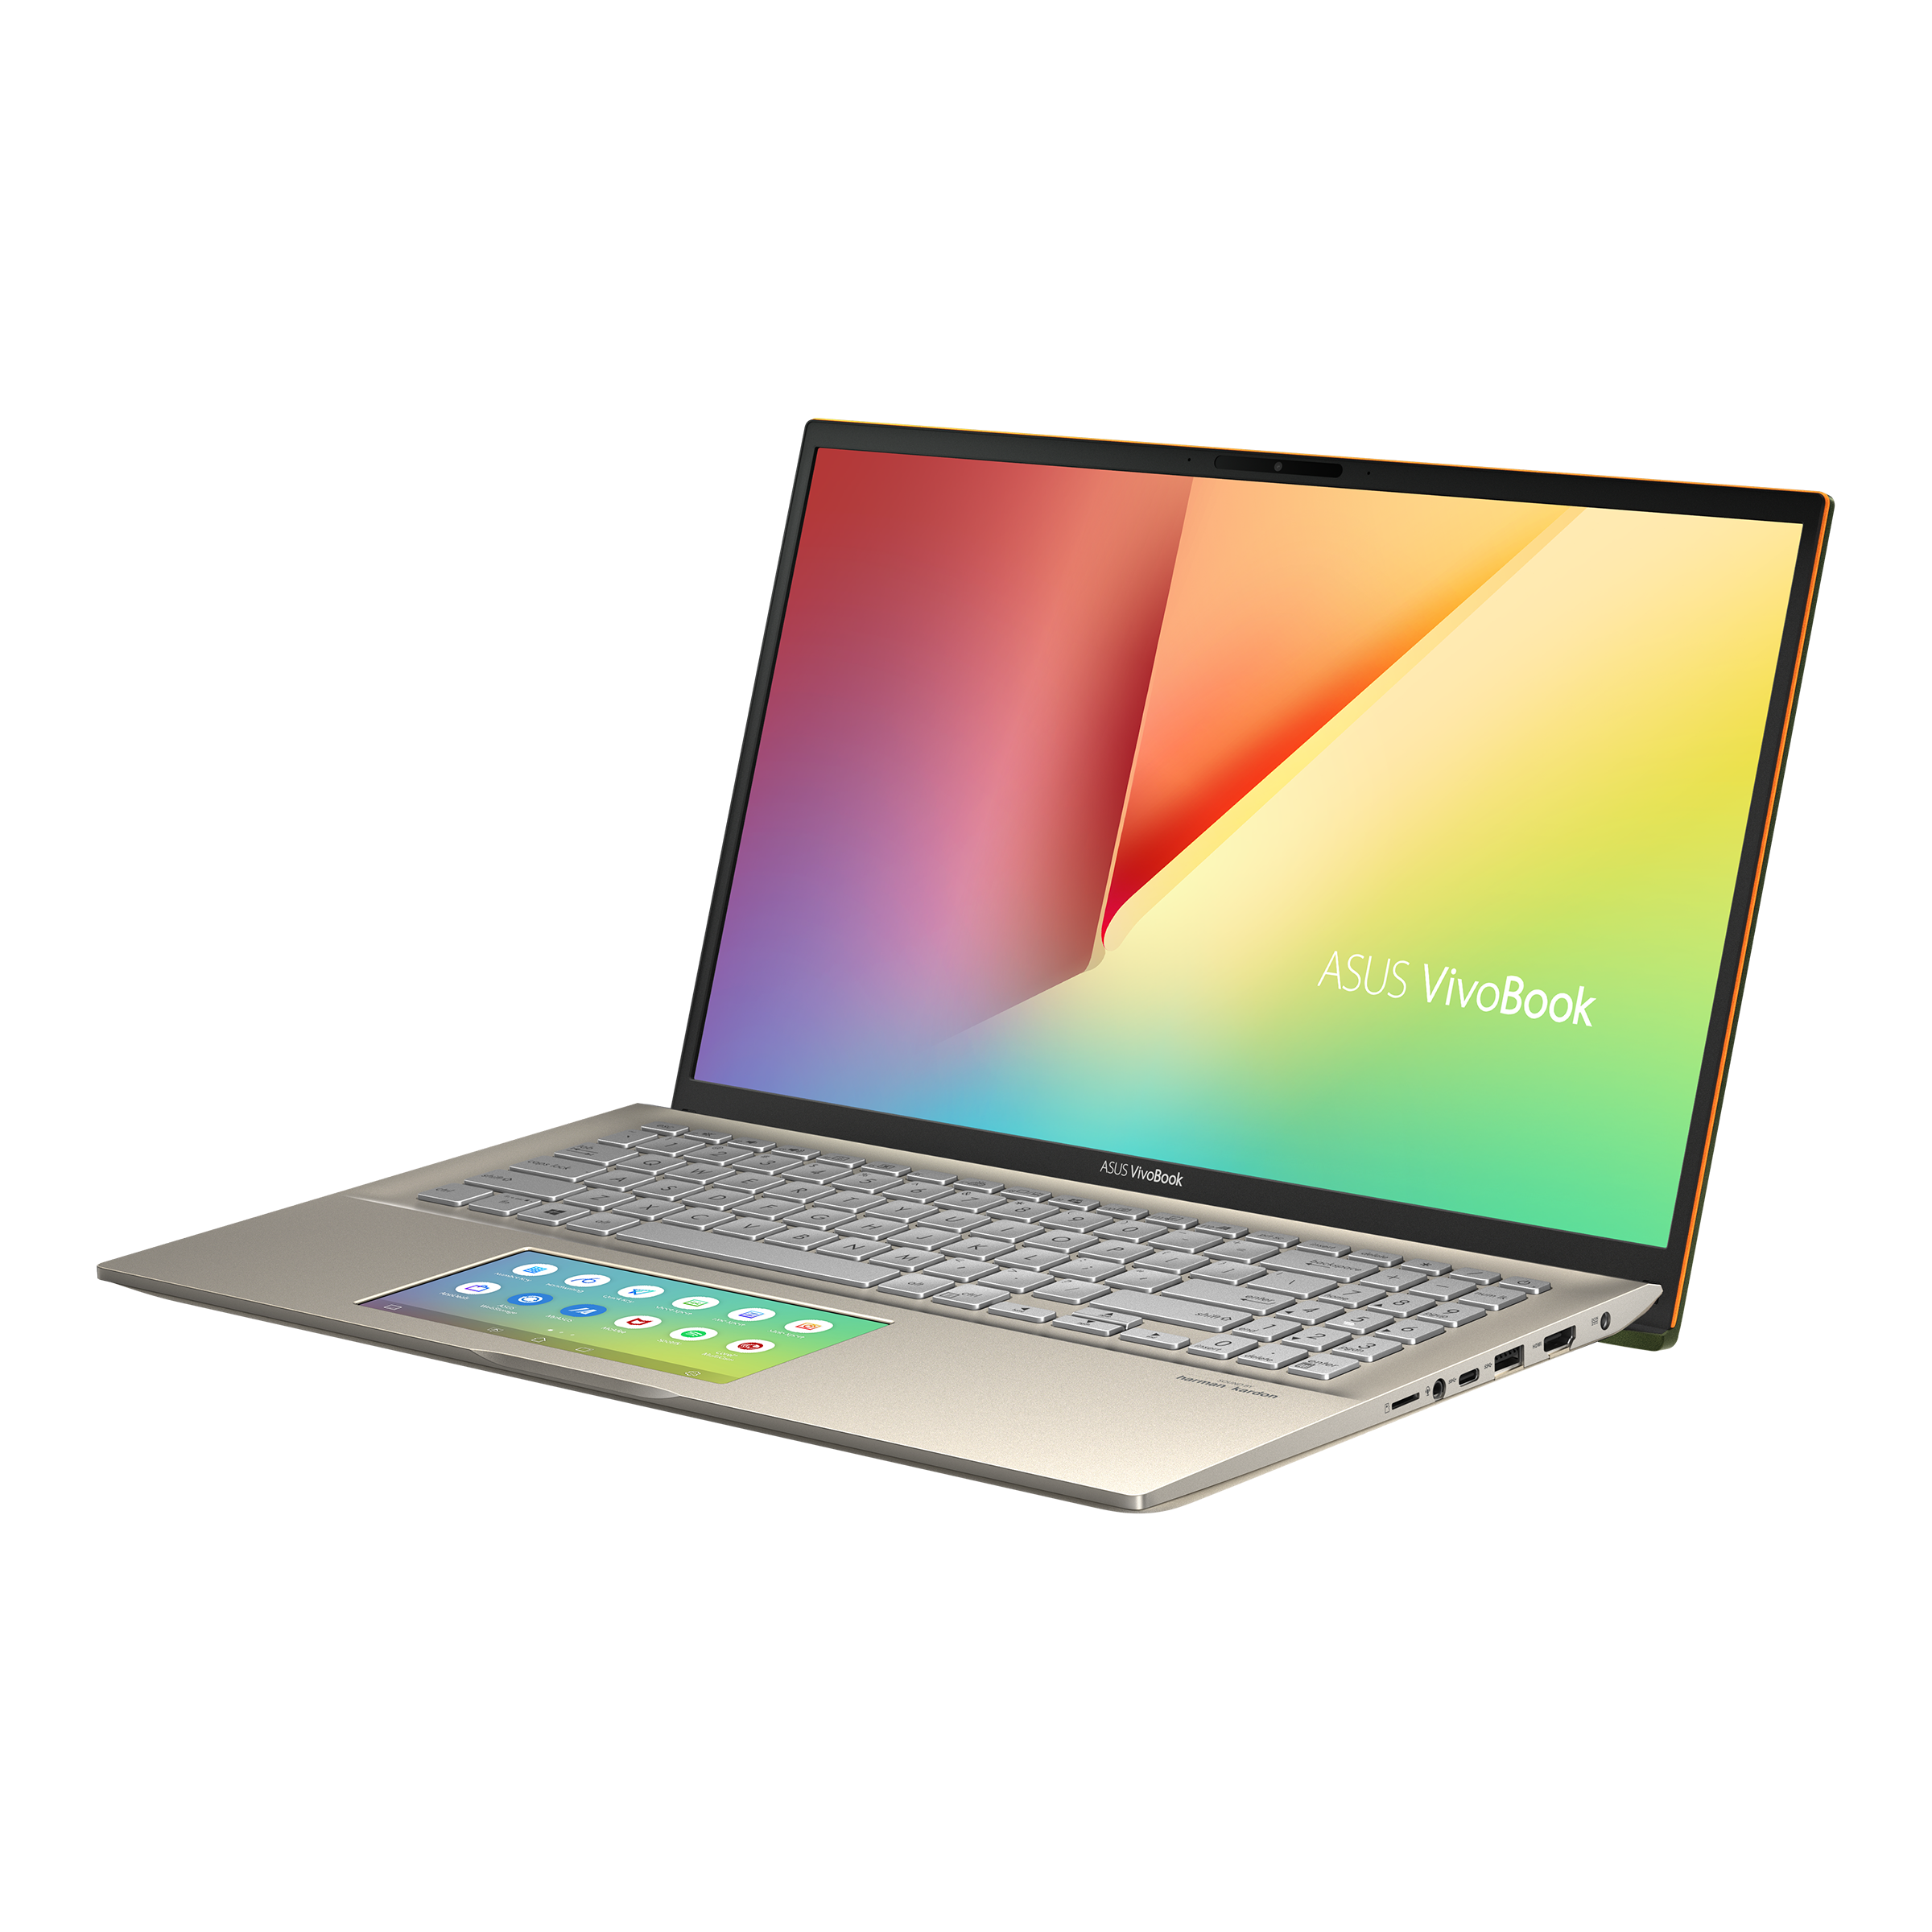 ASUS VivoBook S15 S532 Thin & Light Laptop, 15.6” FHD, Intel Core i5-10210U  CPU, 8GB DDR4 RAM, 512GB PCIe SSD, Windows 10 Home, IR camera